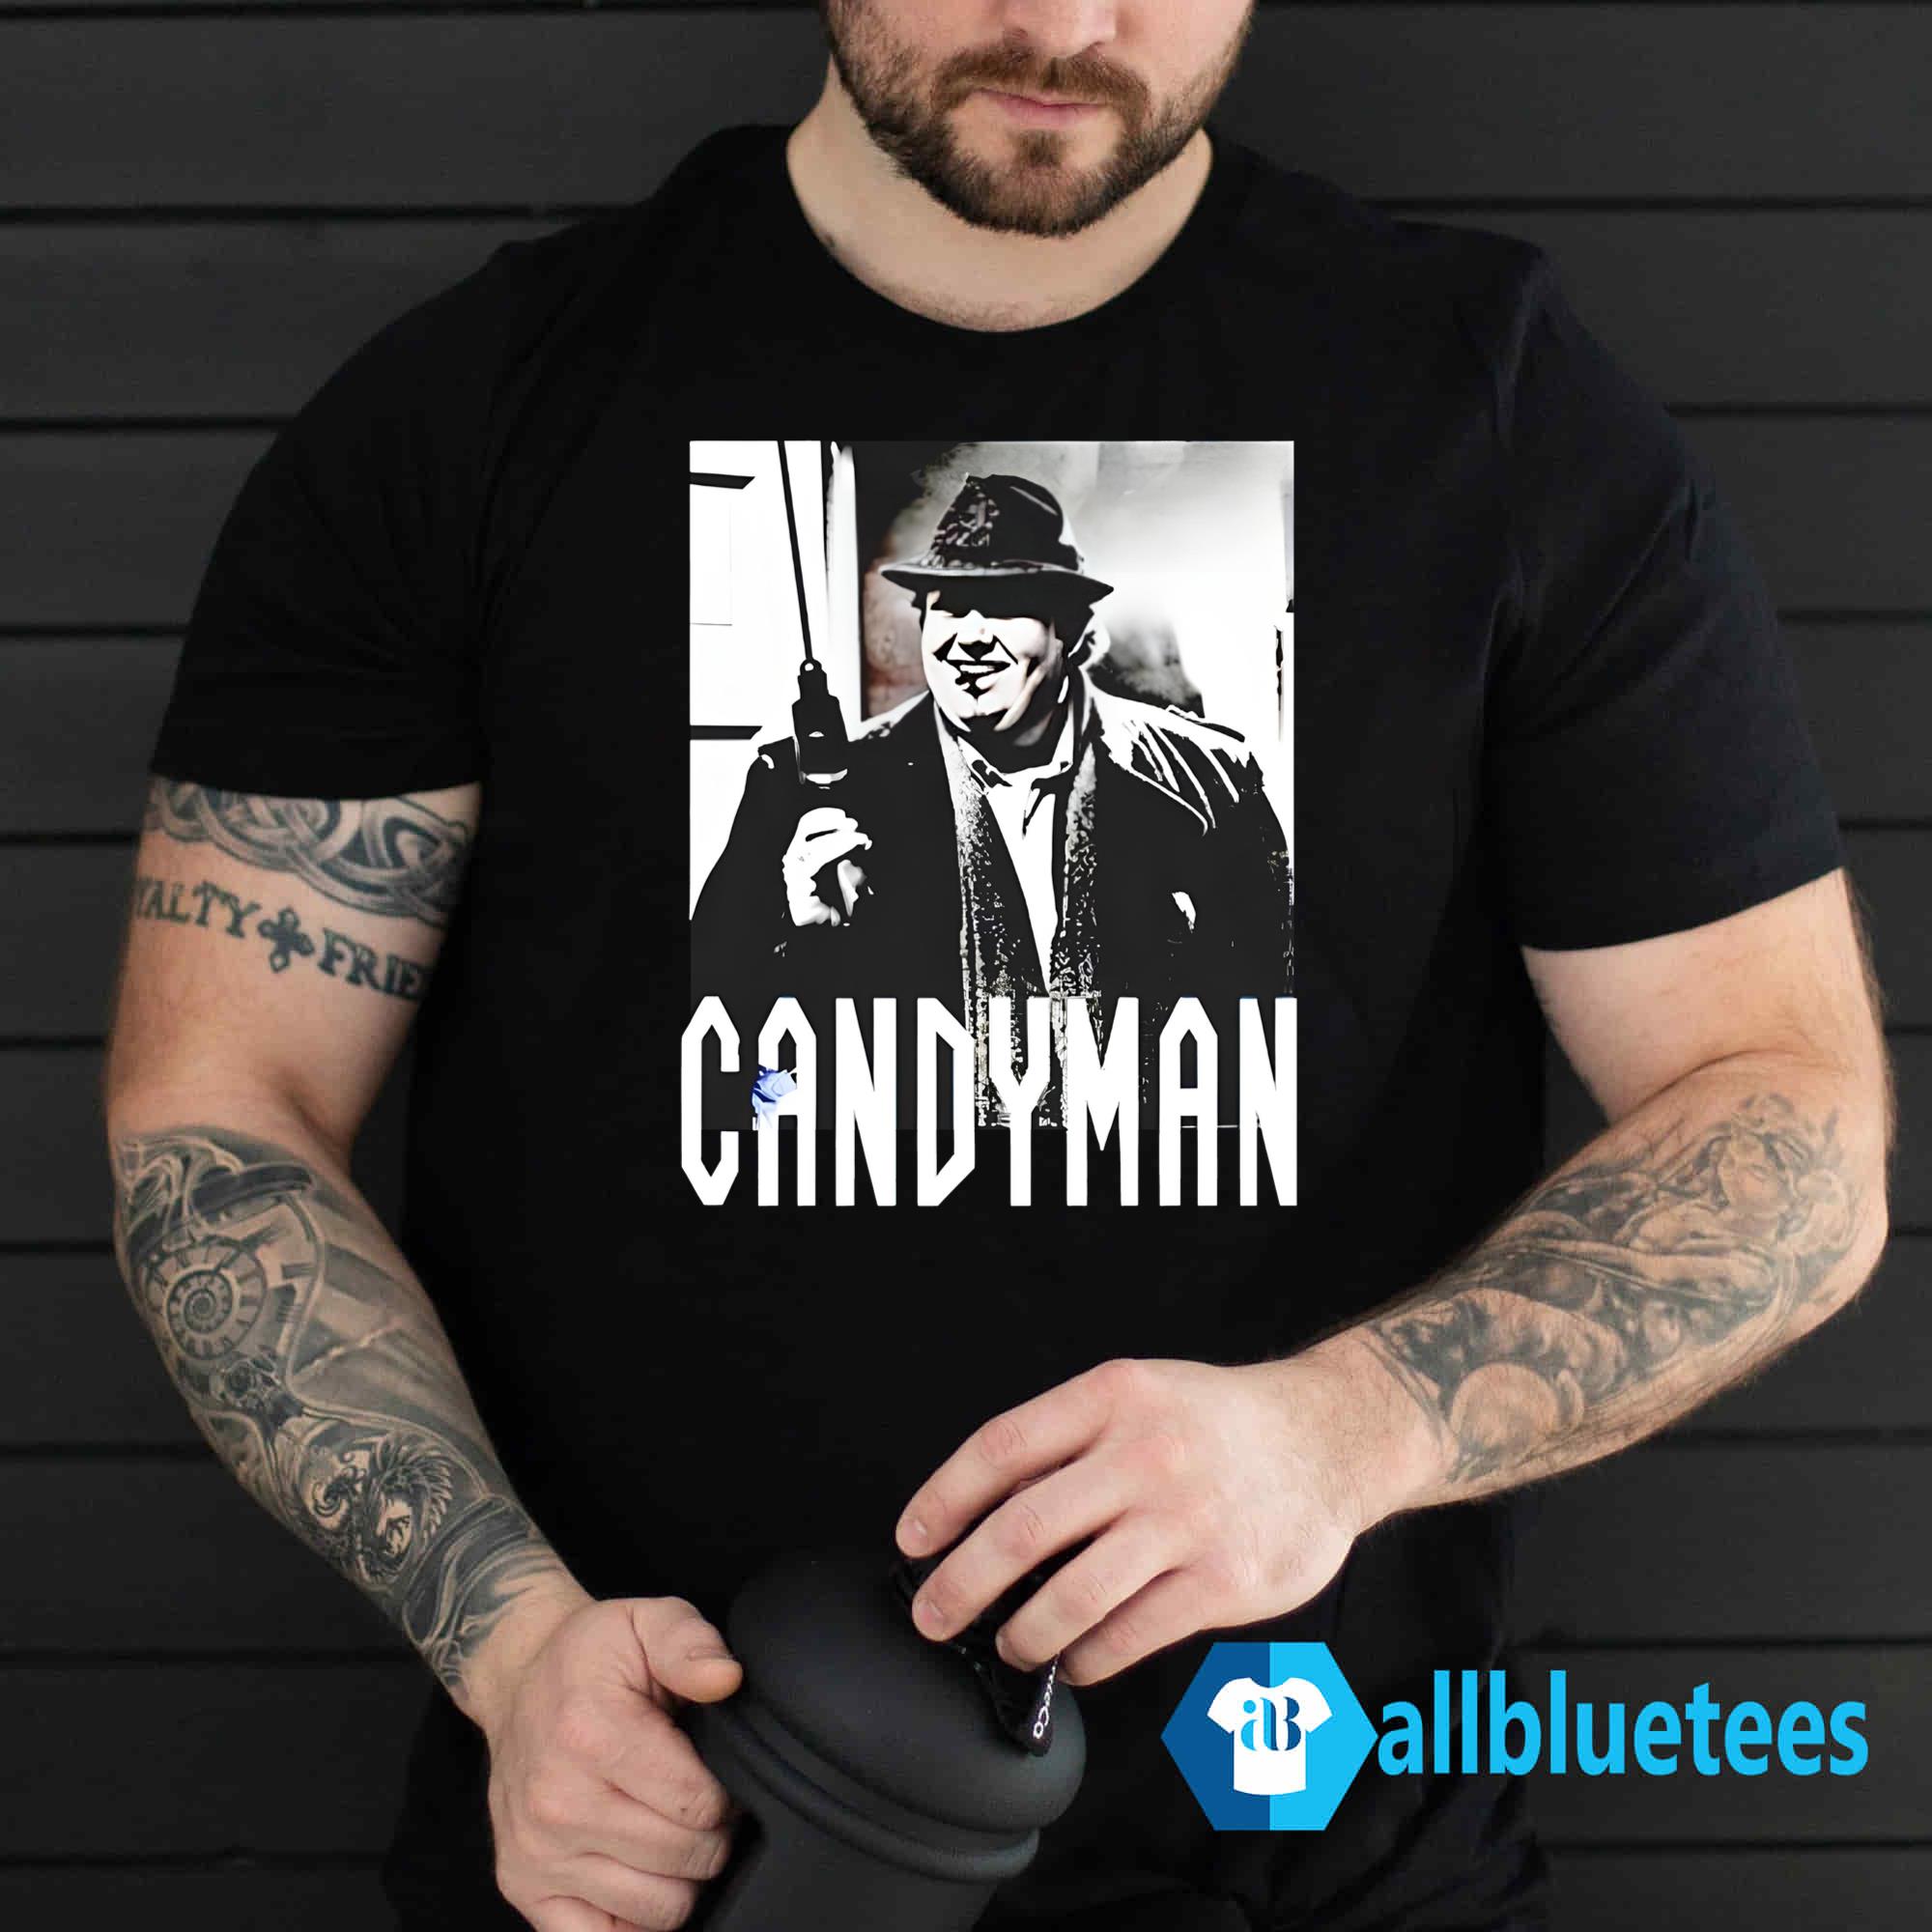 Candyman Candyman Candyman' 🐝🐝🐝... - Vivid Ink Walsall | Facebook